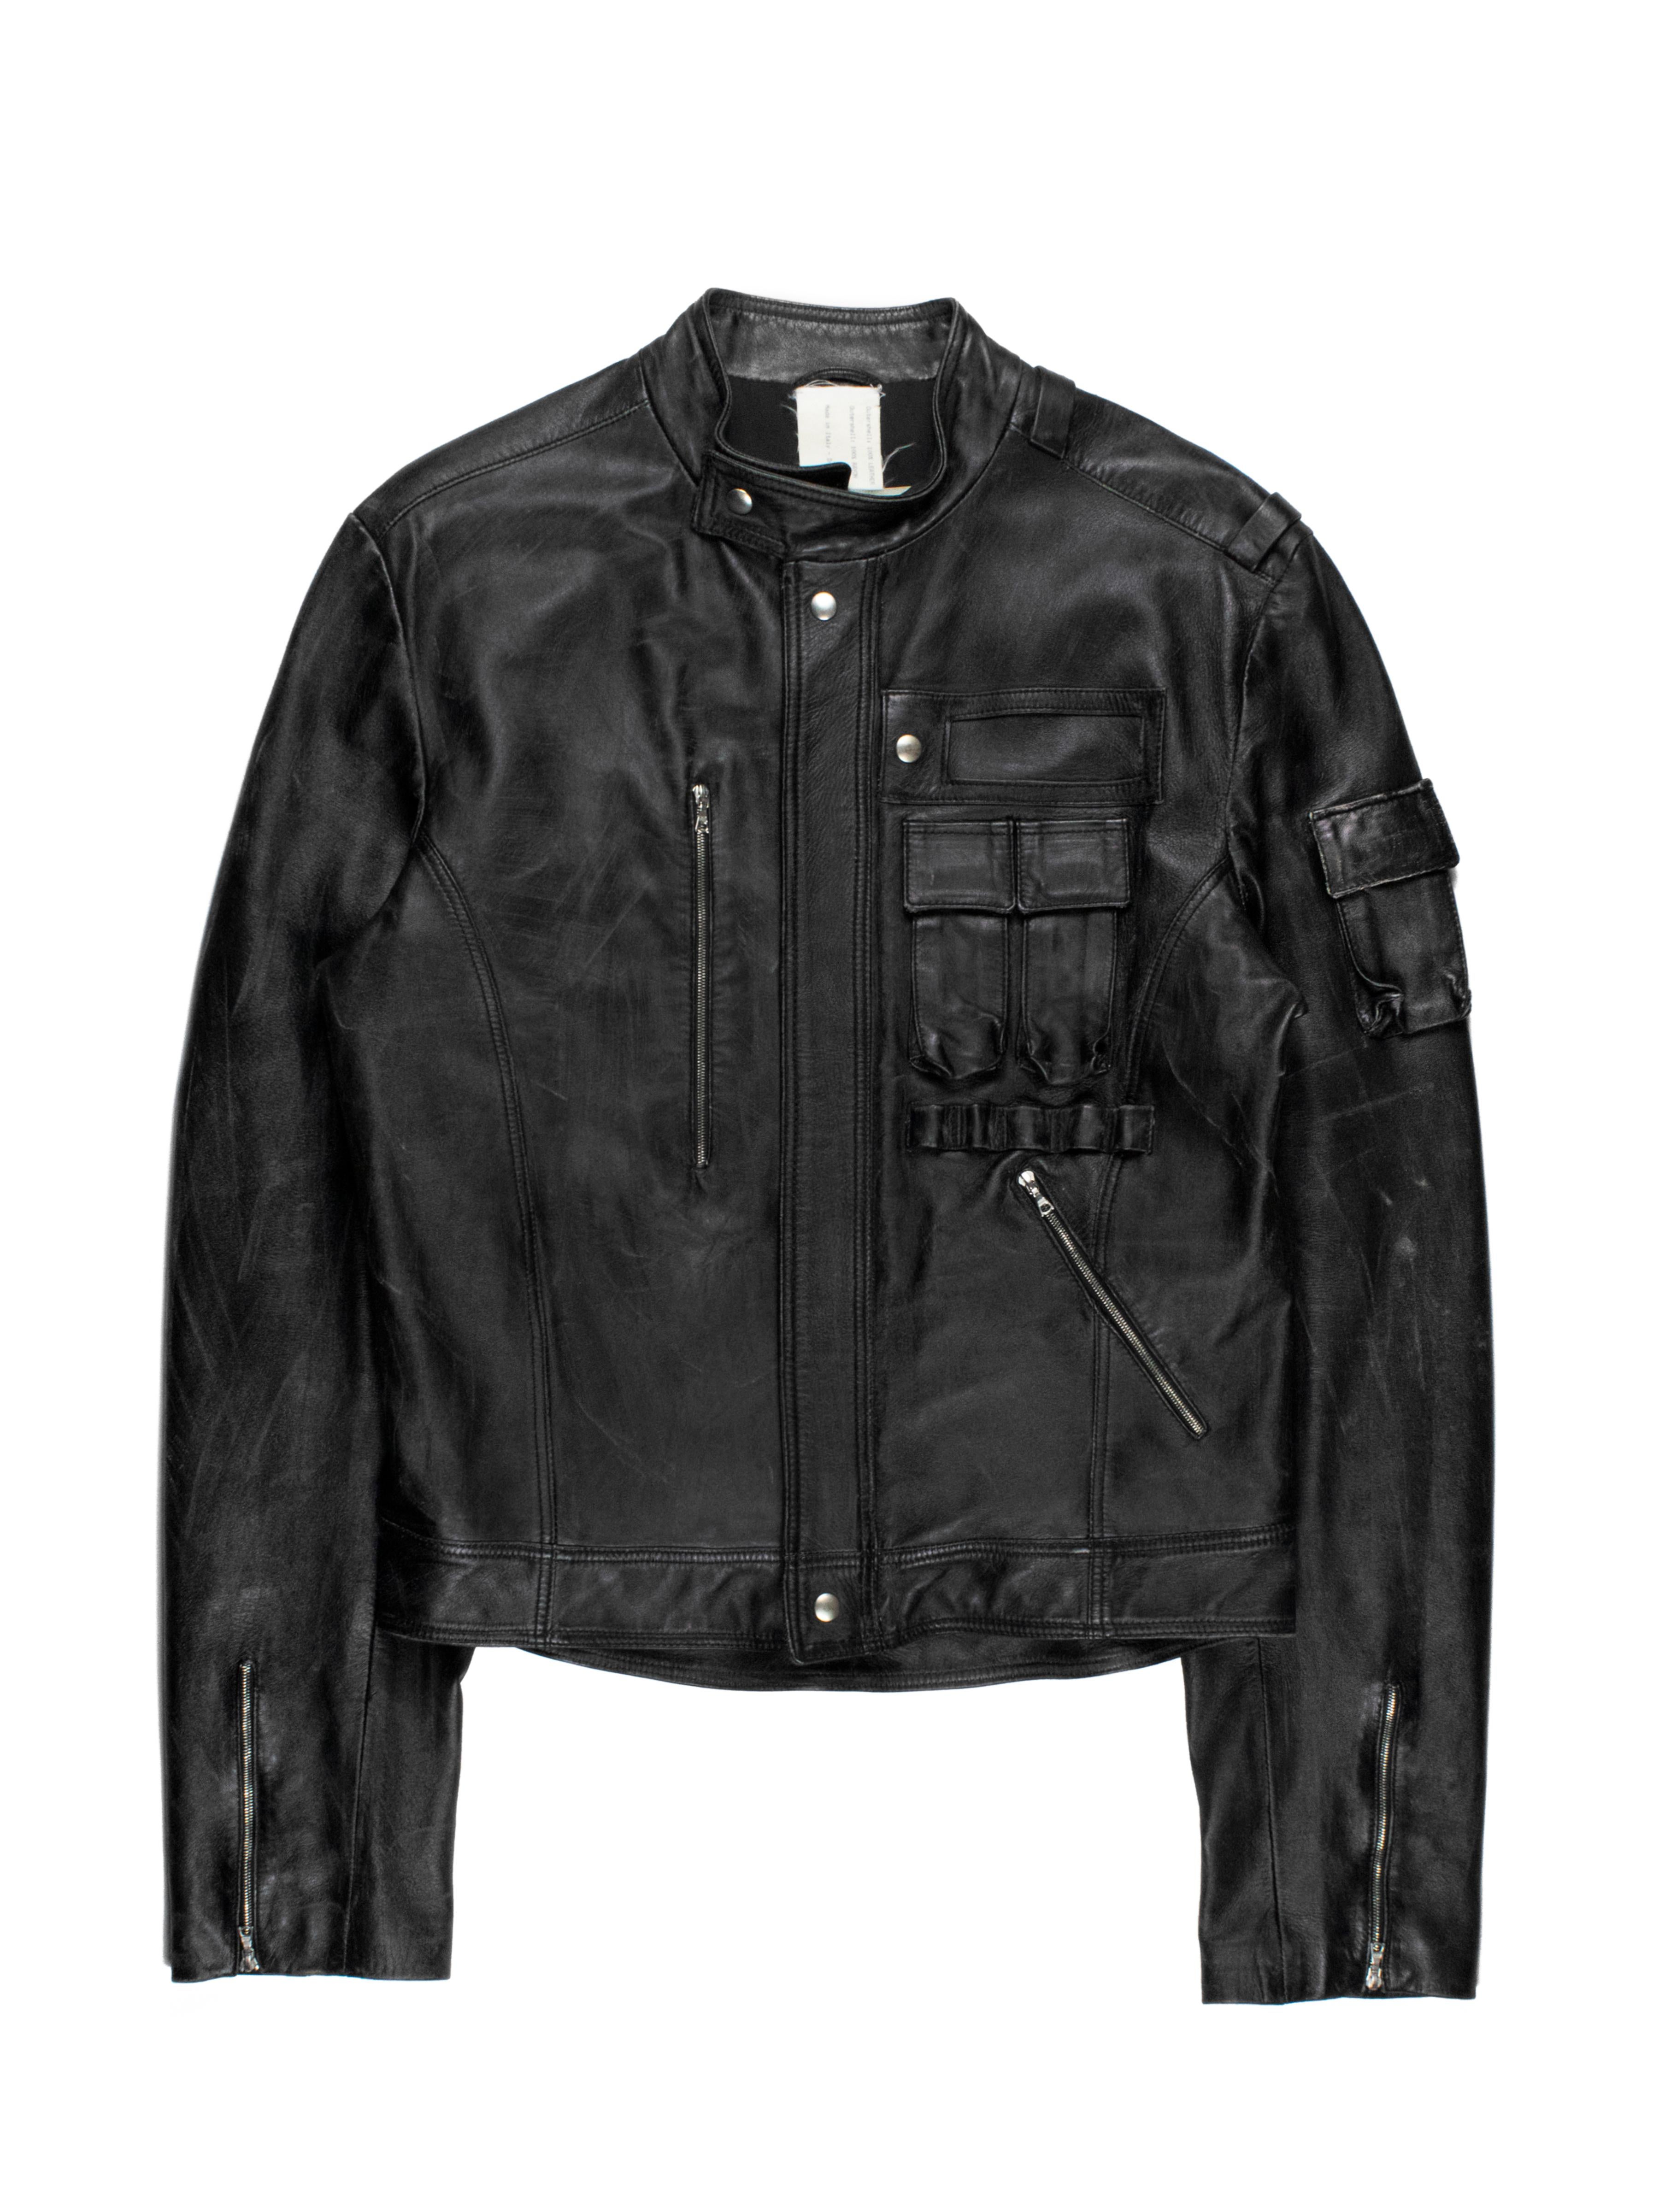 ruffo leather jacket